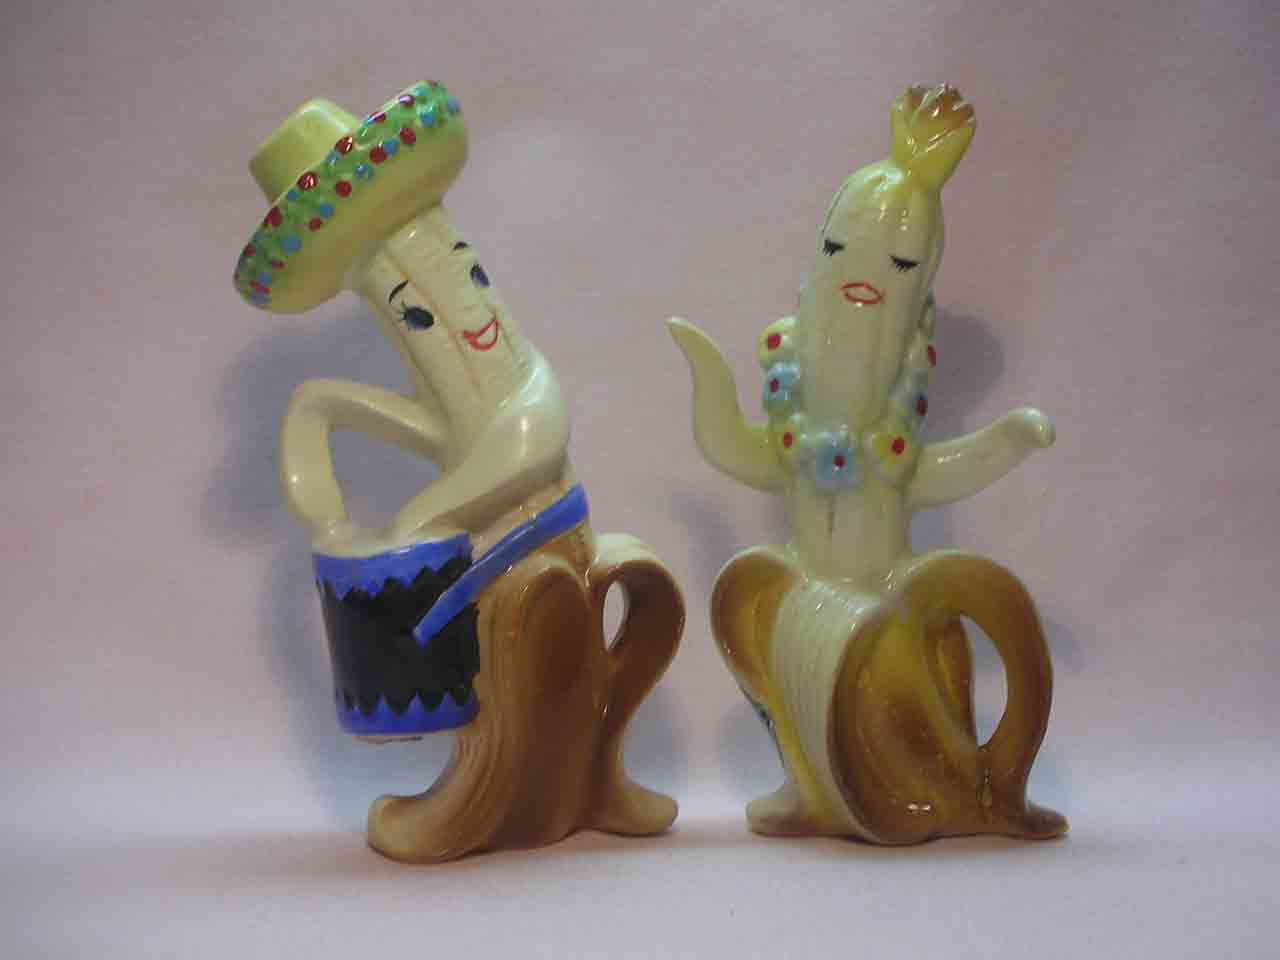 Anthropomorphic banana salt and pepper shakers